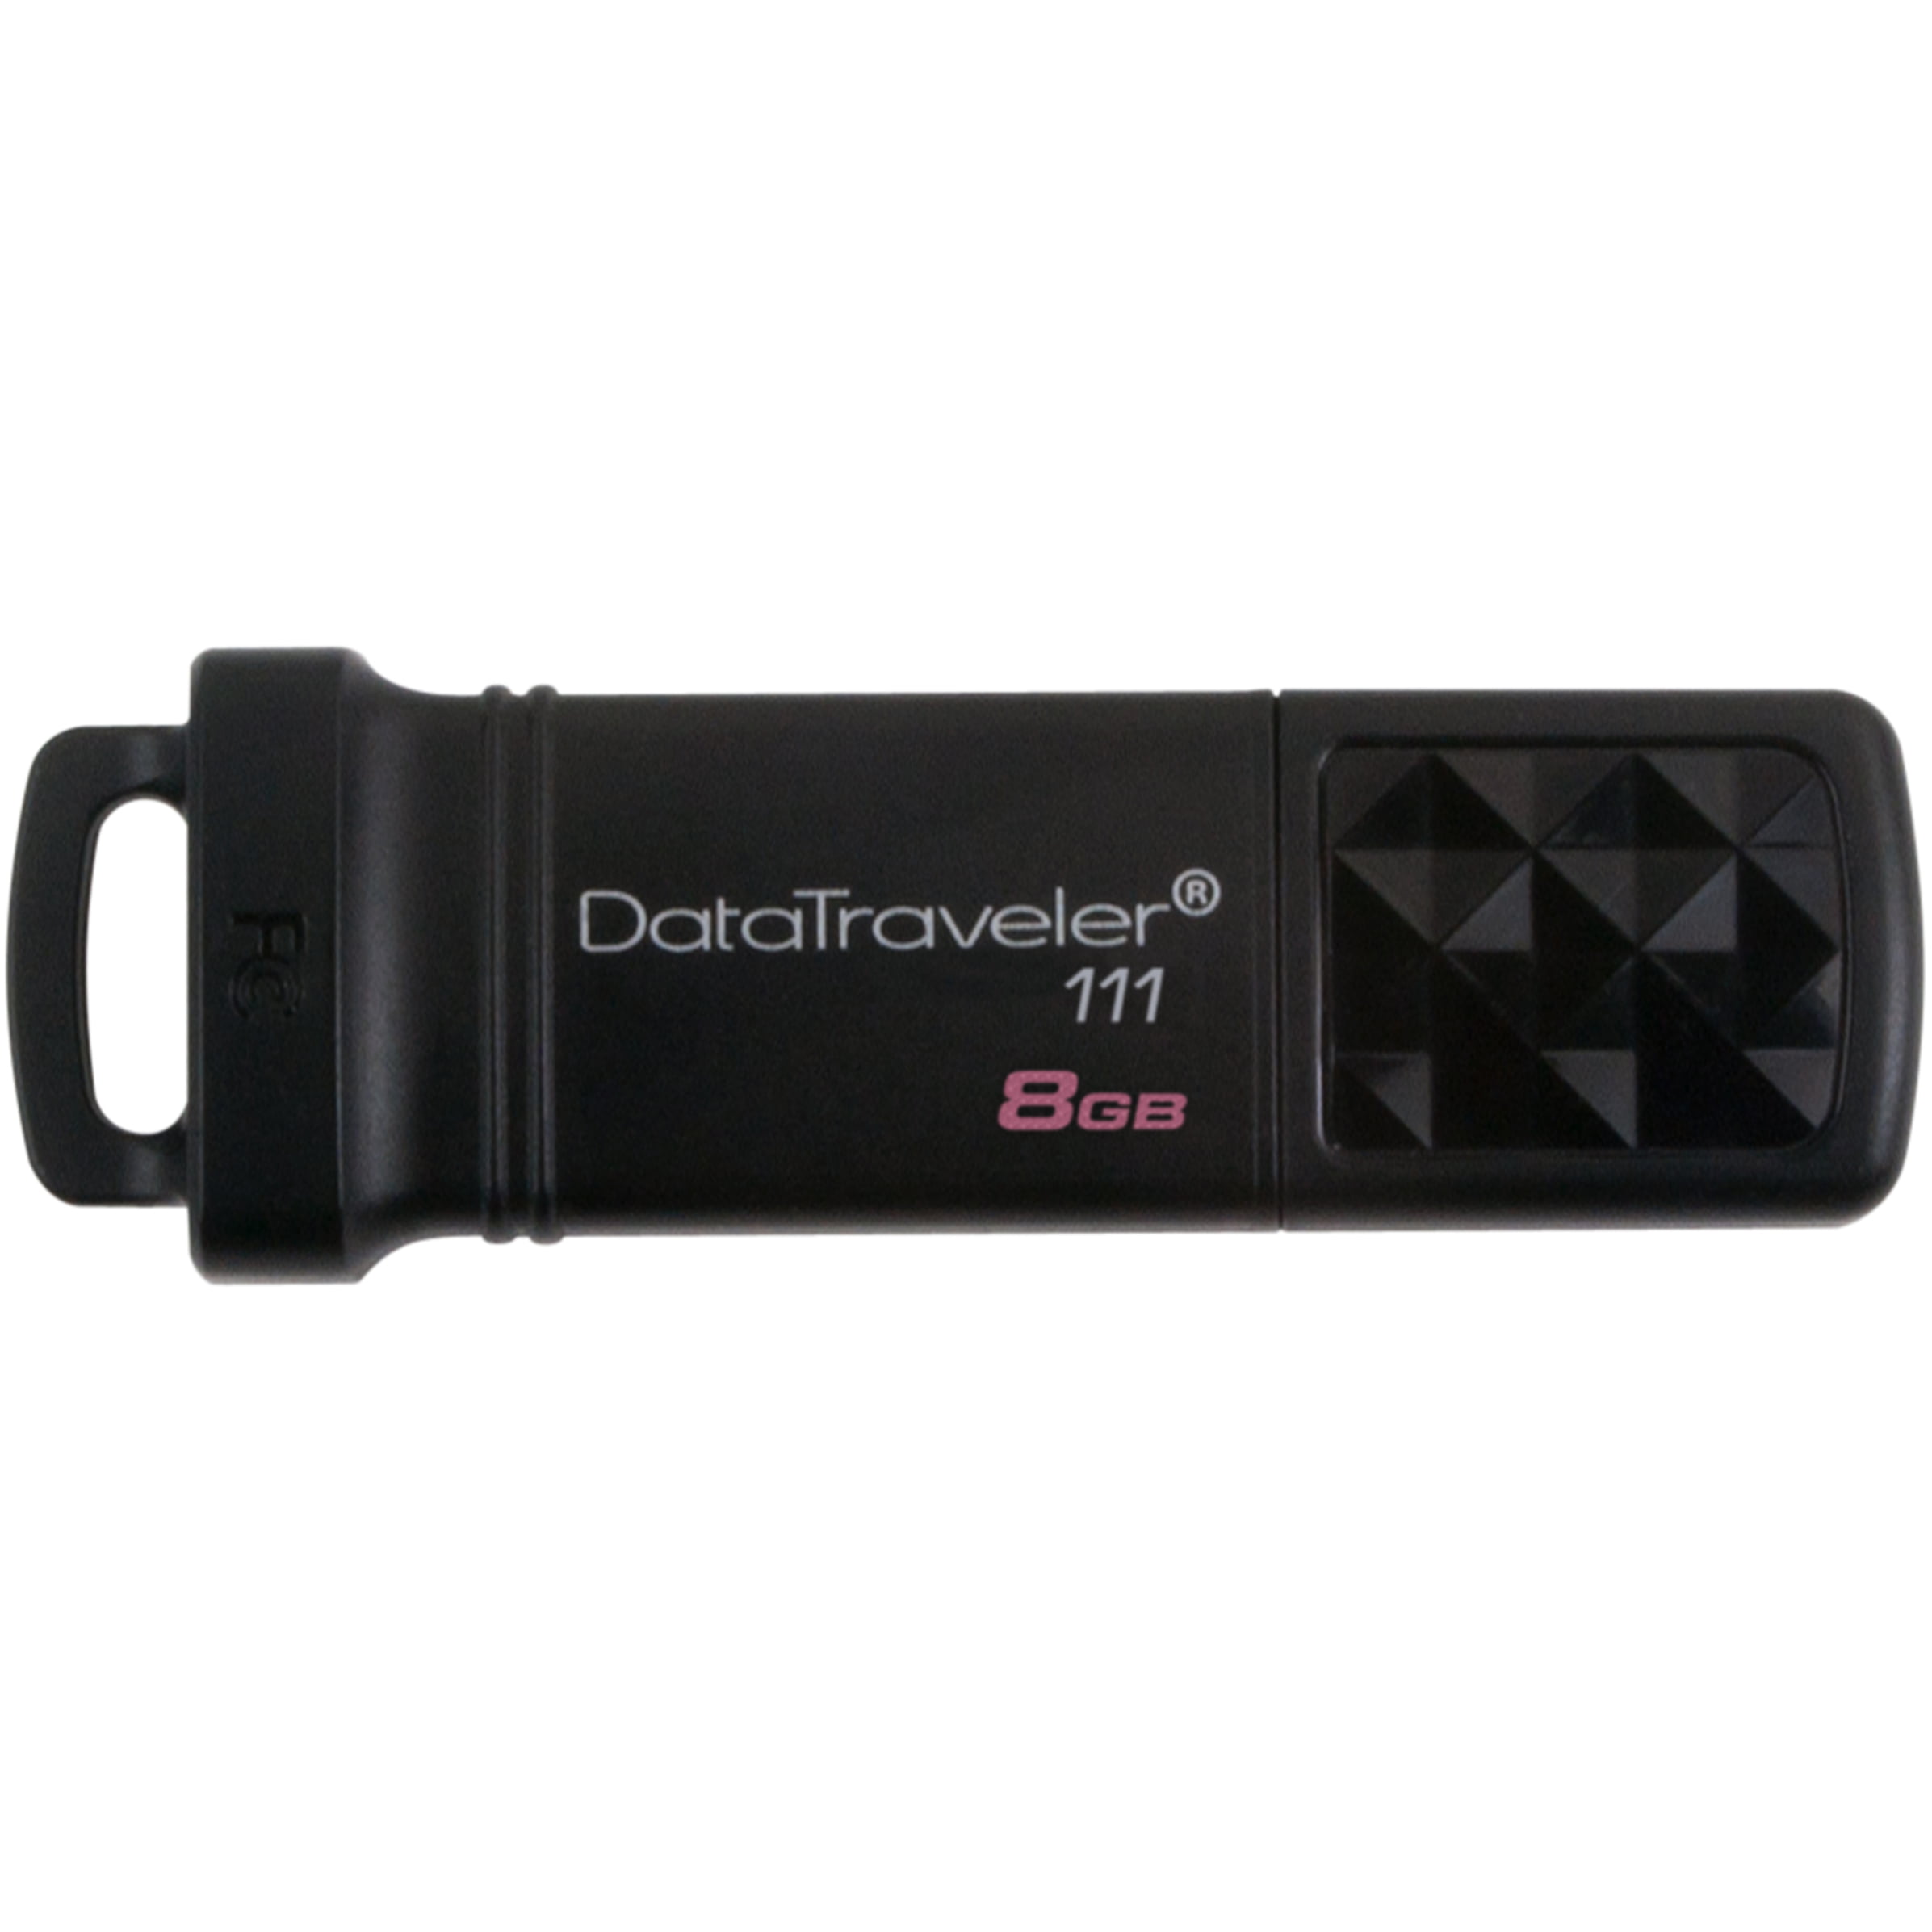 Ni let at håndtere storhedsvanvid Kingston 8GB DataTraveler 111 USB 3.0 Flash Drive - Walmart.com